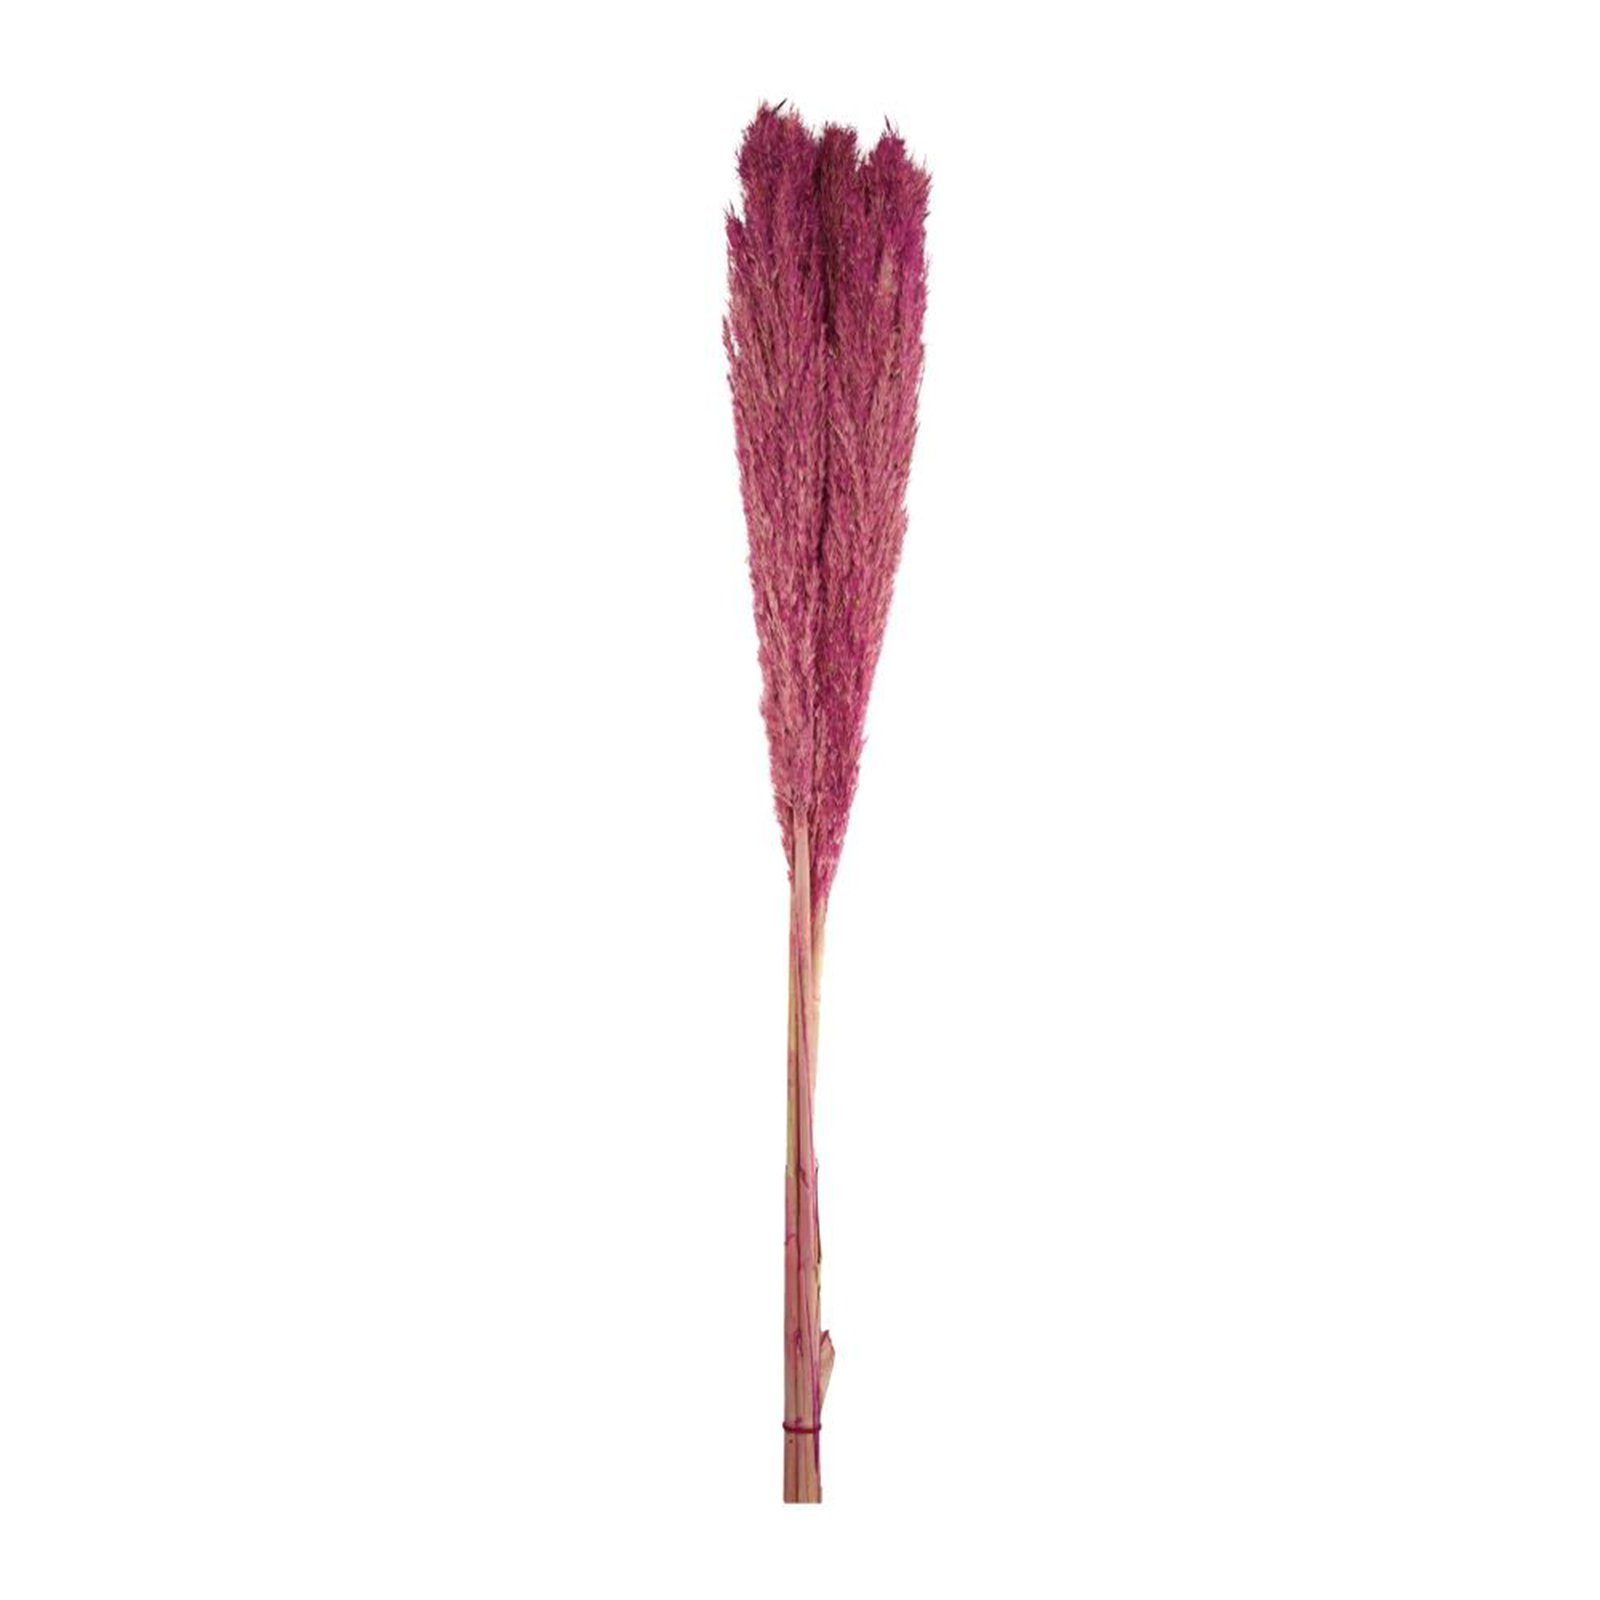 Trockenblume 3 Arundo donax - pink - Wild reed - Pfahlrohr 115 - cm Stück, DIJK plume